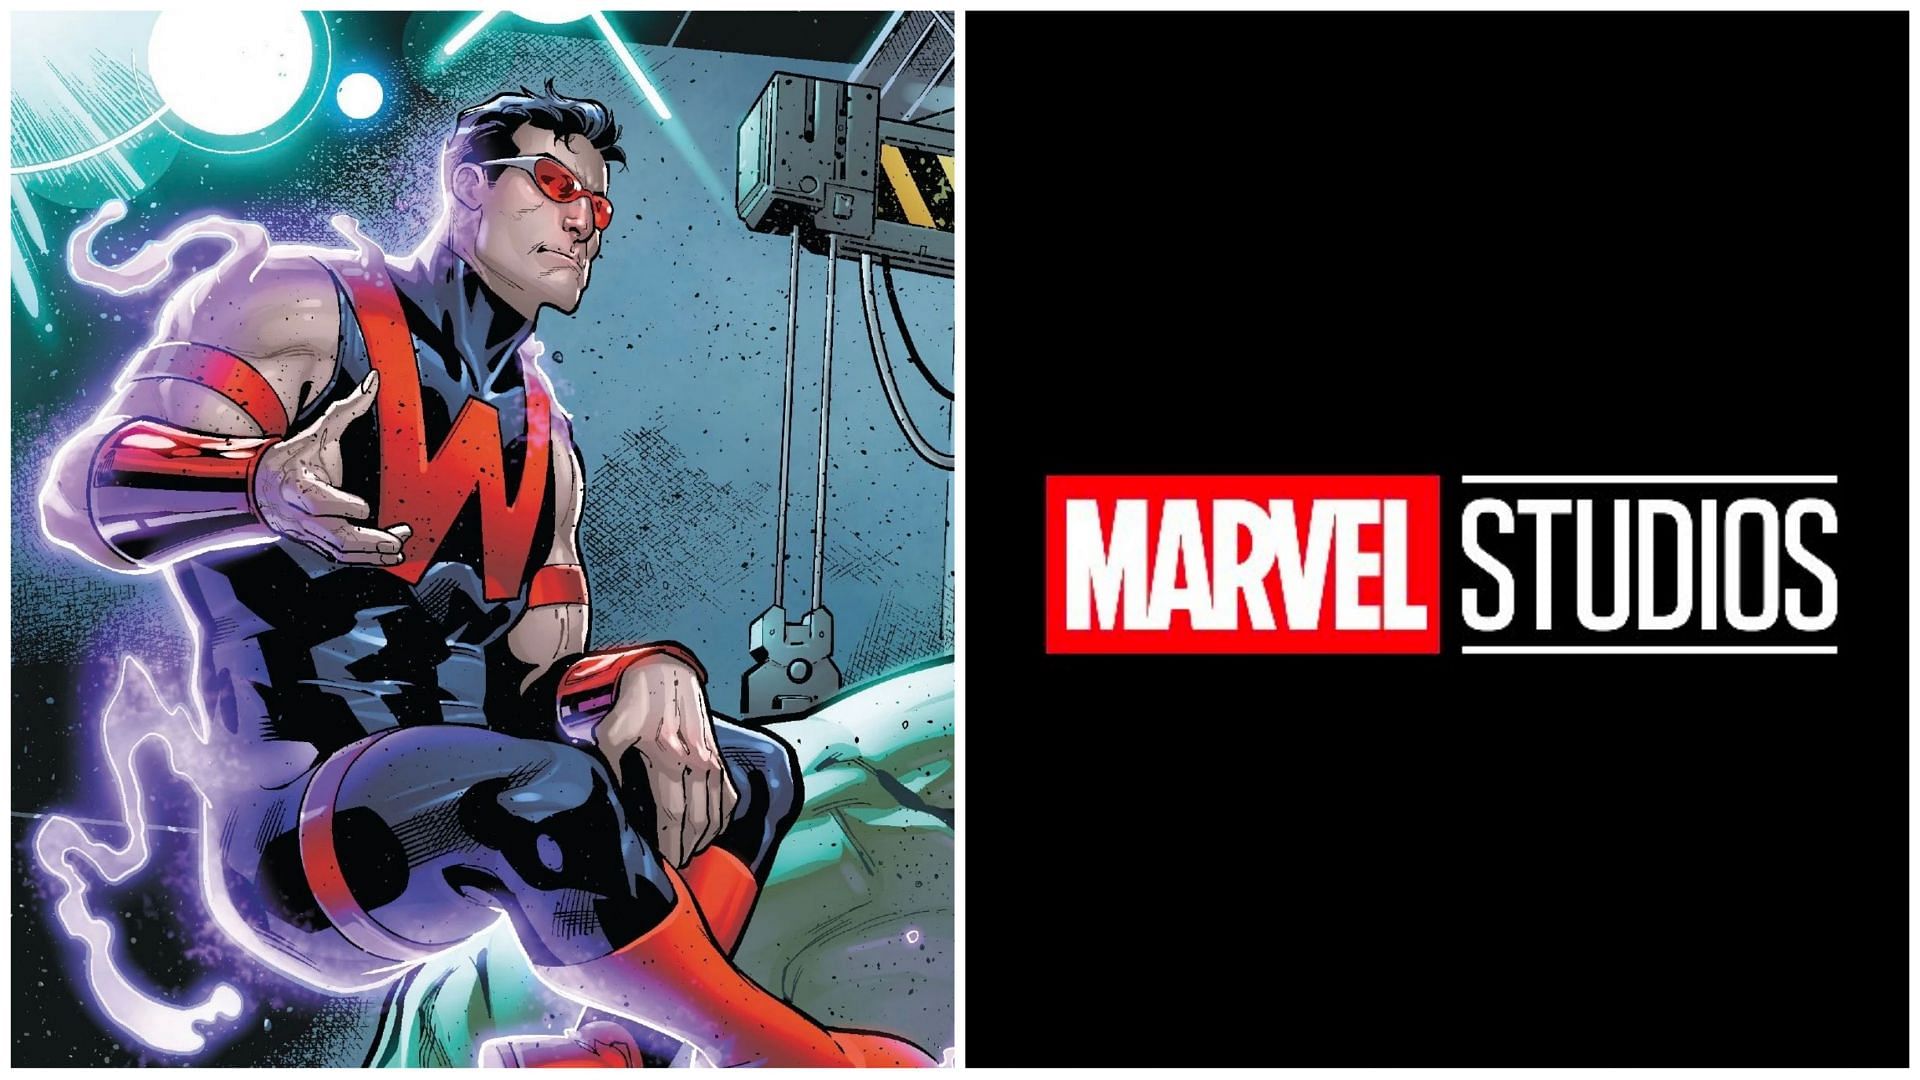 The Wonder Man series is in development (Images via Marvel Comics and Marvel Studios)